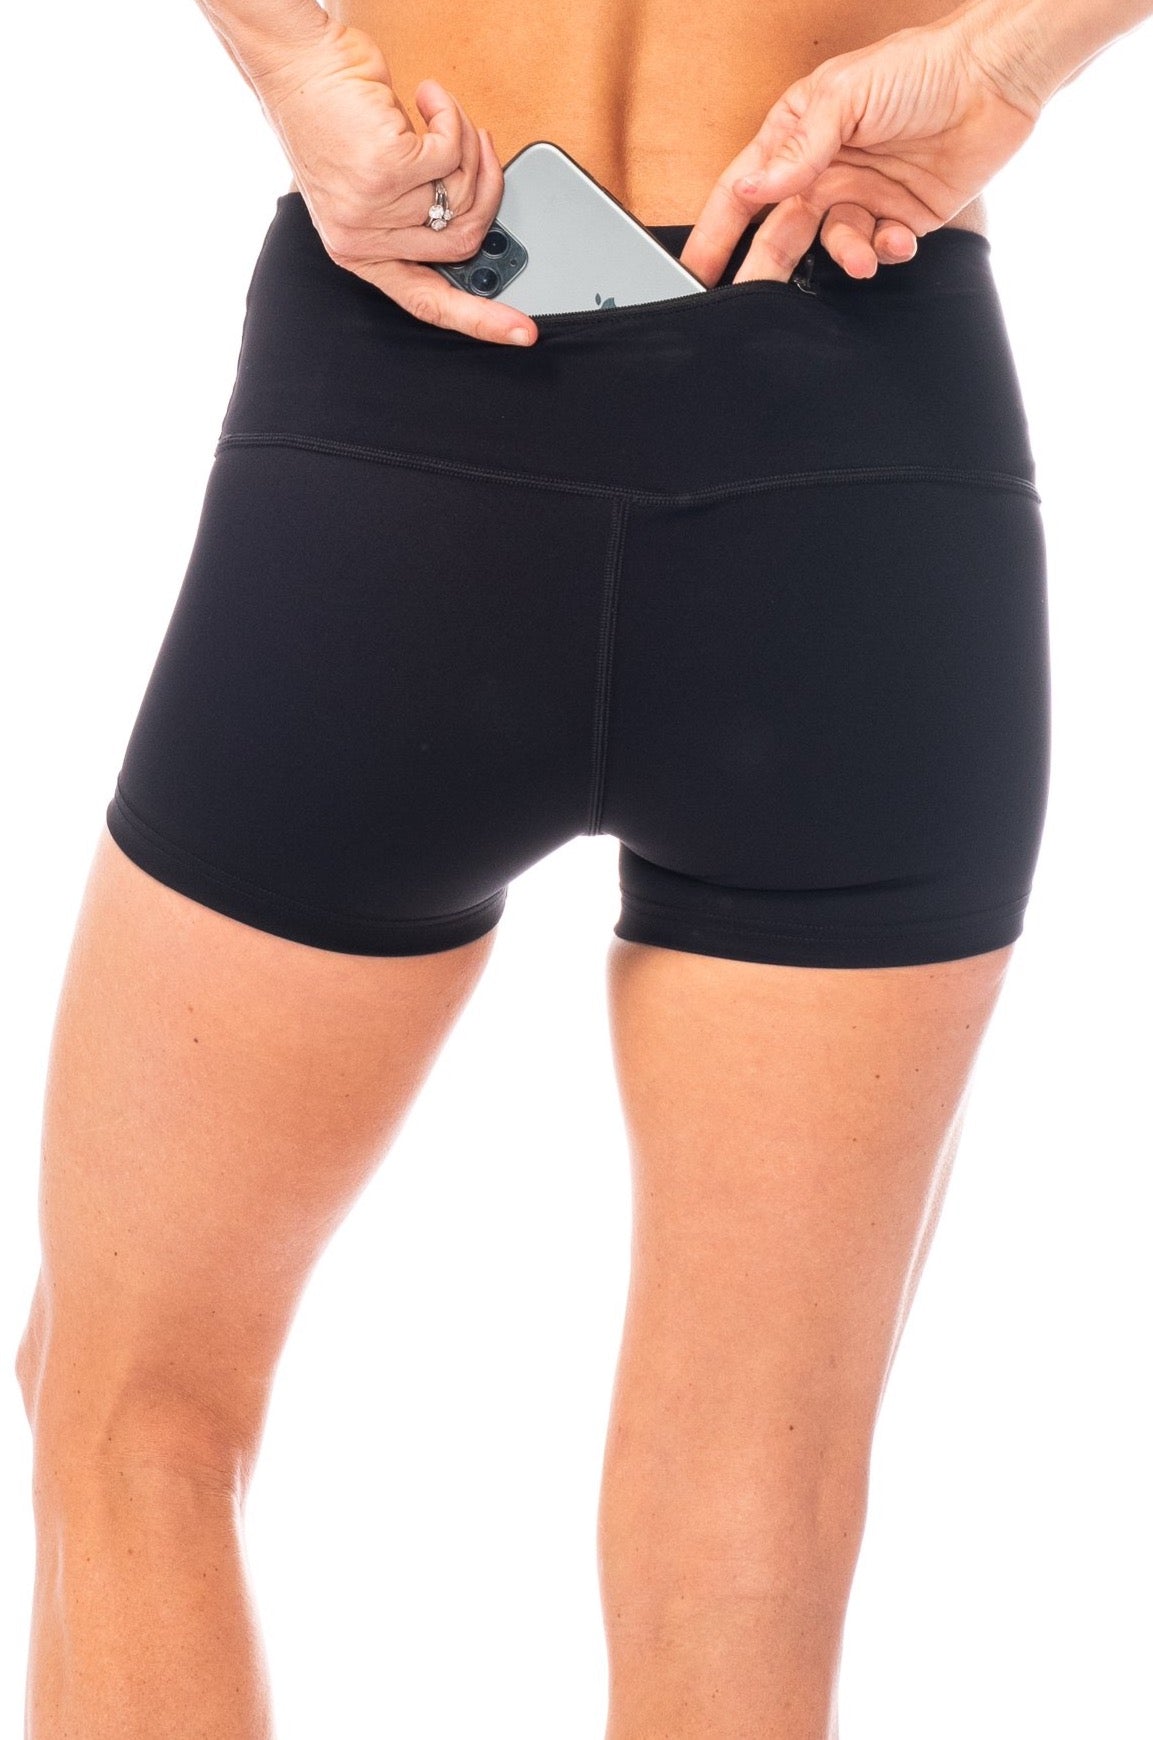 WYN by MALO PR shorts 2.0 - black (with side pockets)